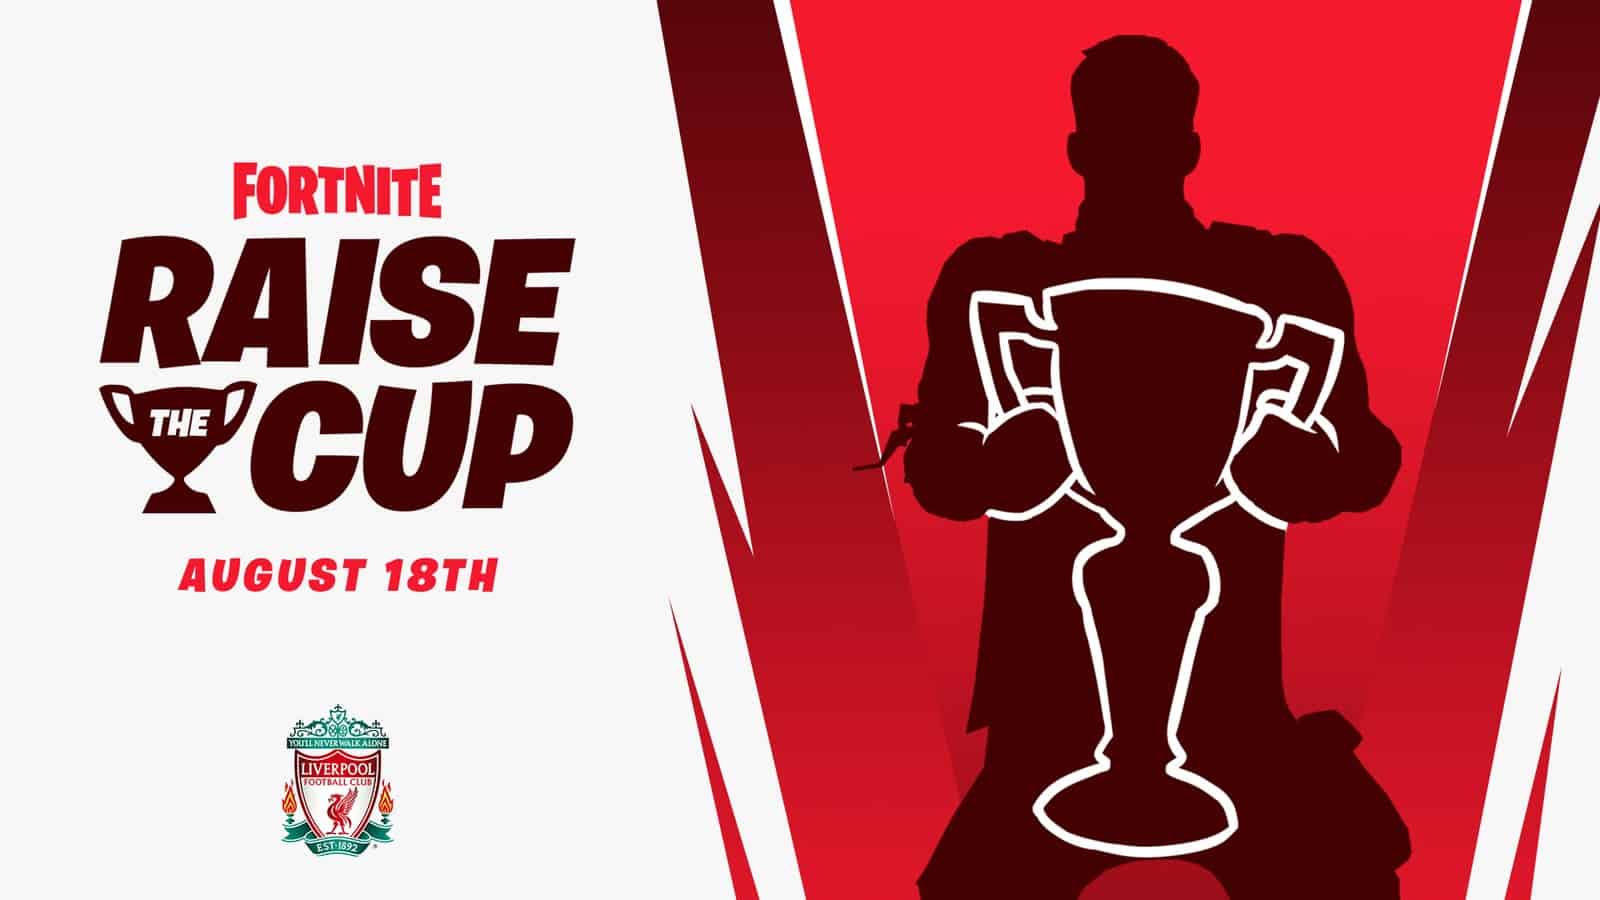 Fortnite x Liverpool Football Club Raise The Cup Tournament Announced